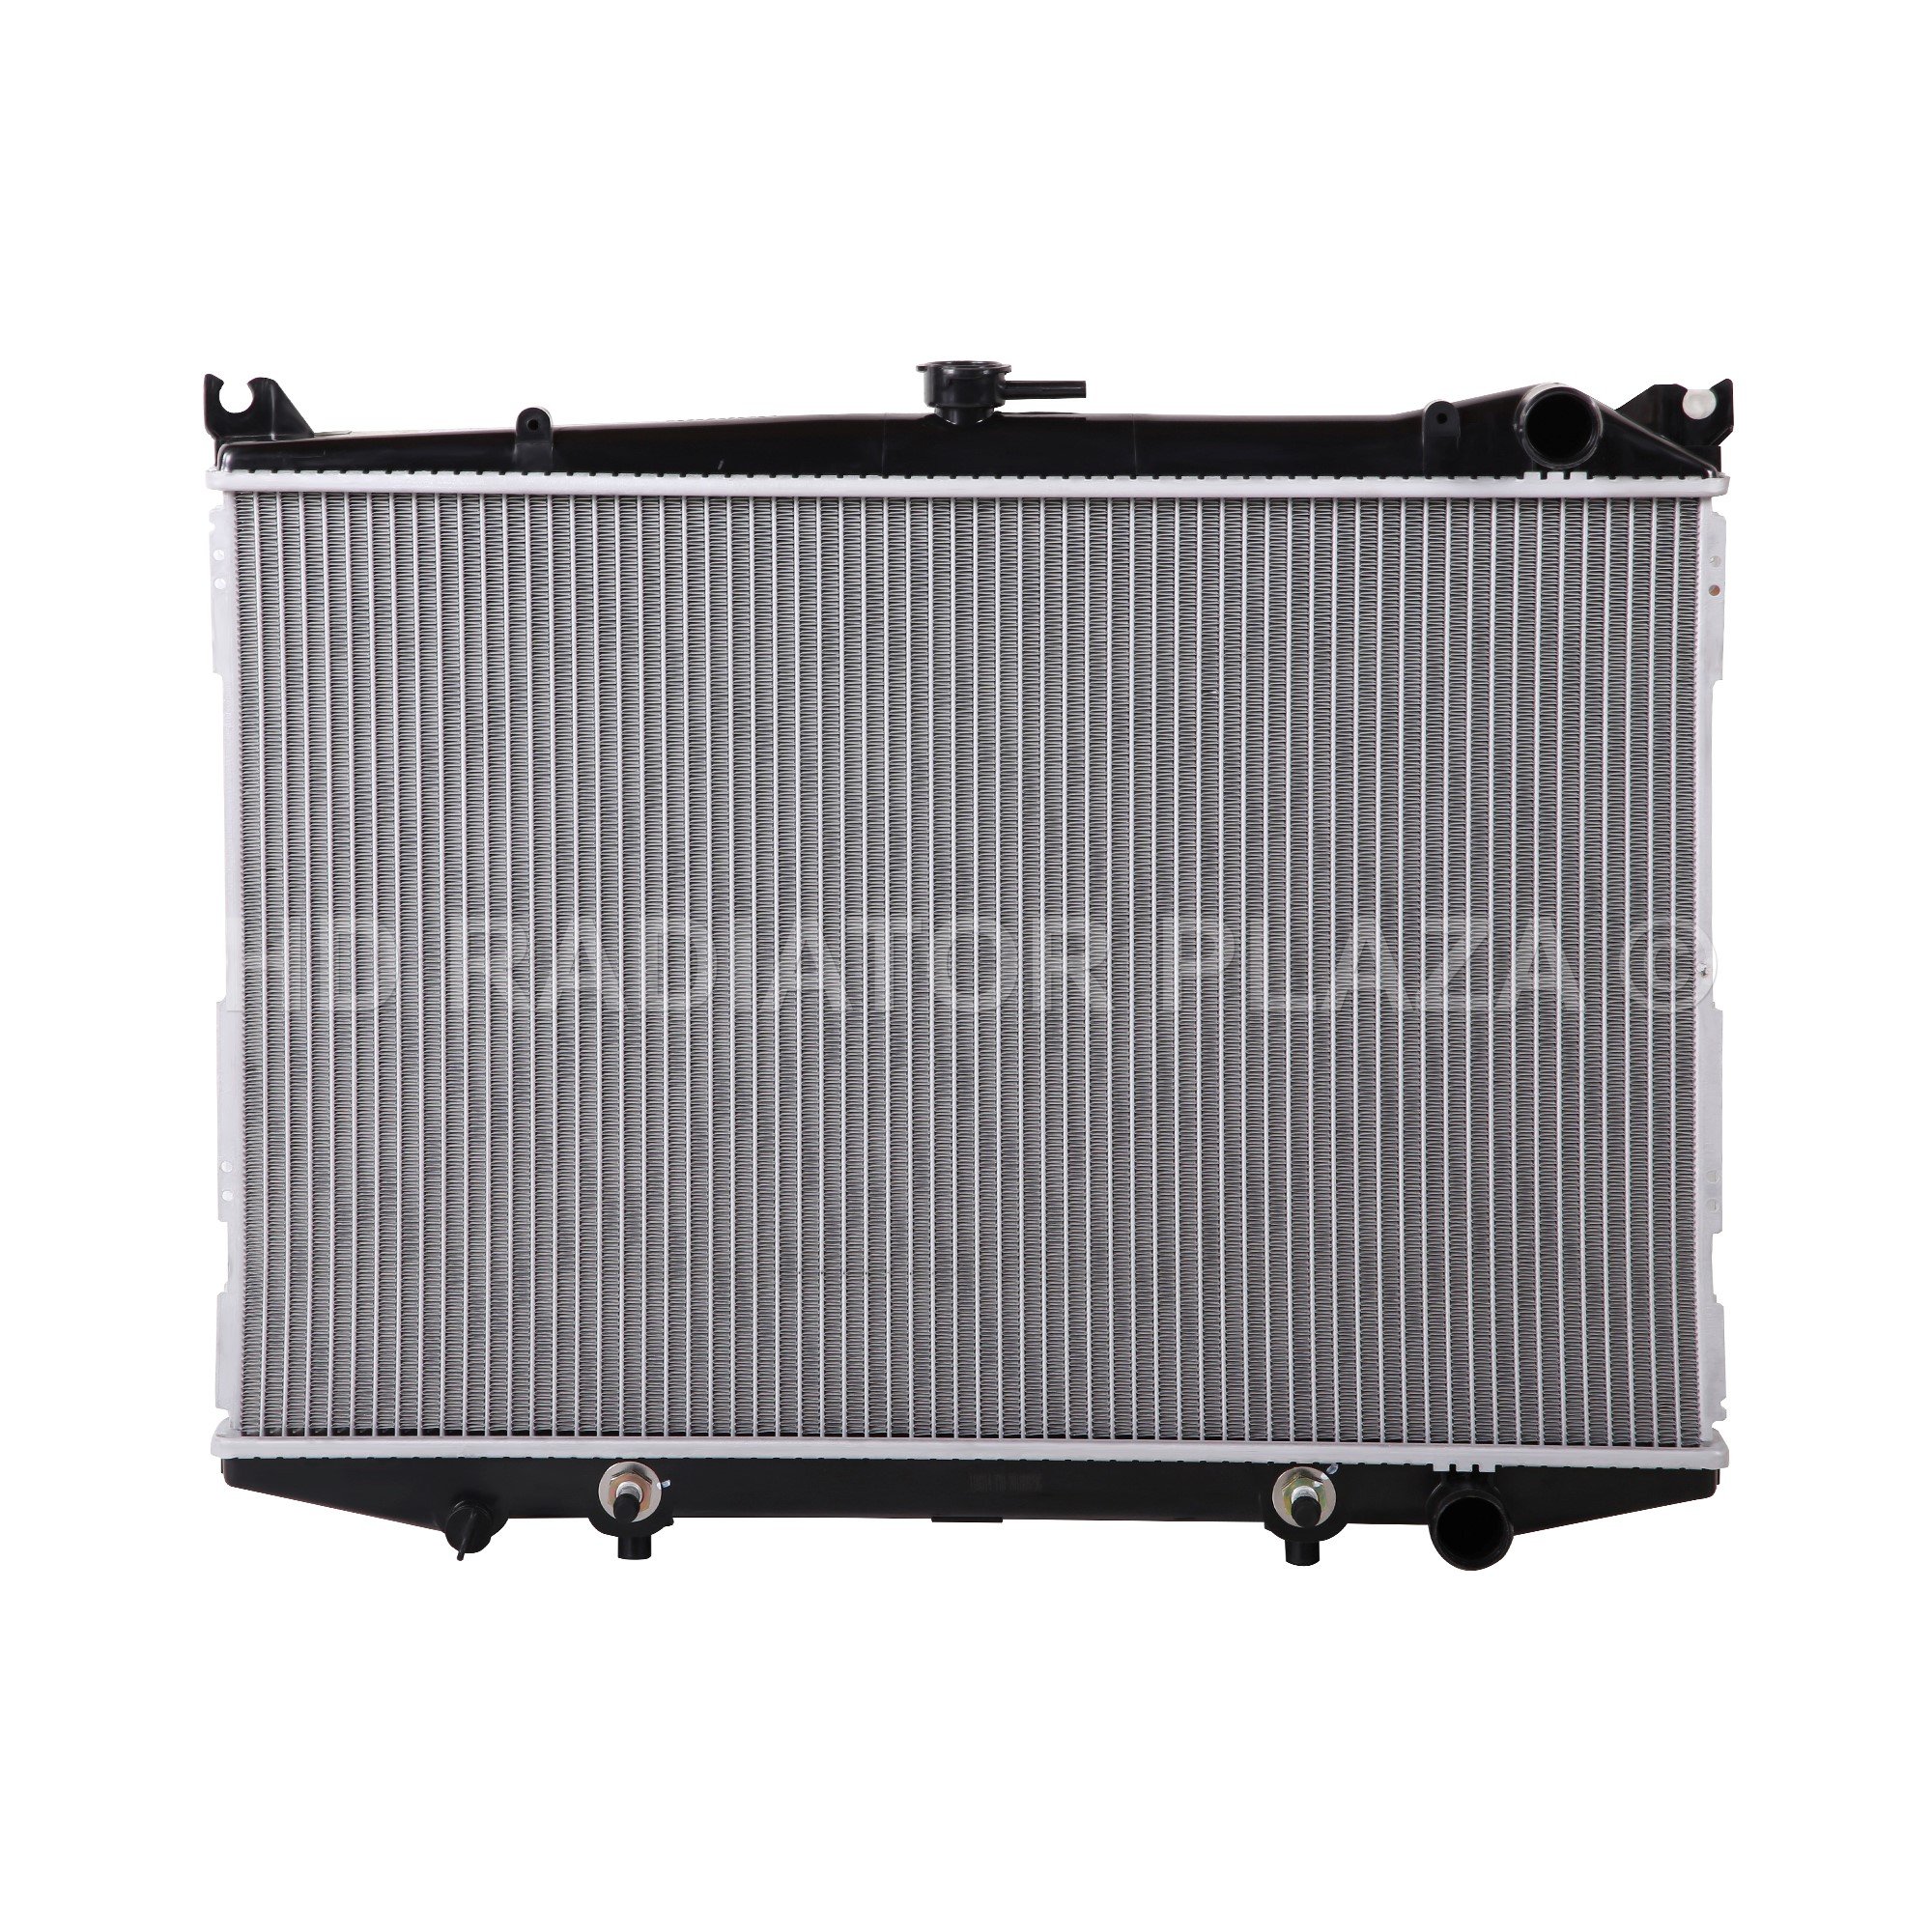 Radiator for Nissan D21, Pickup, Pathfinder